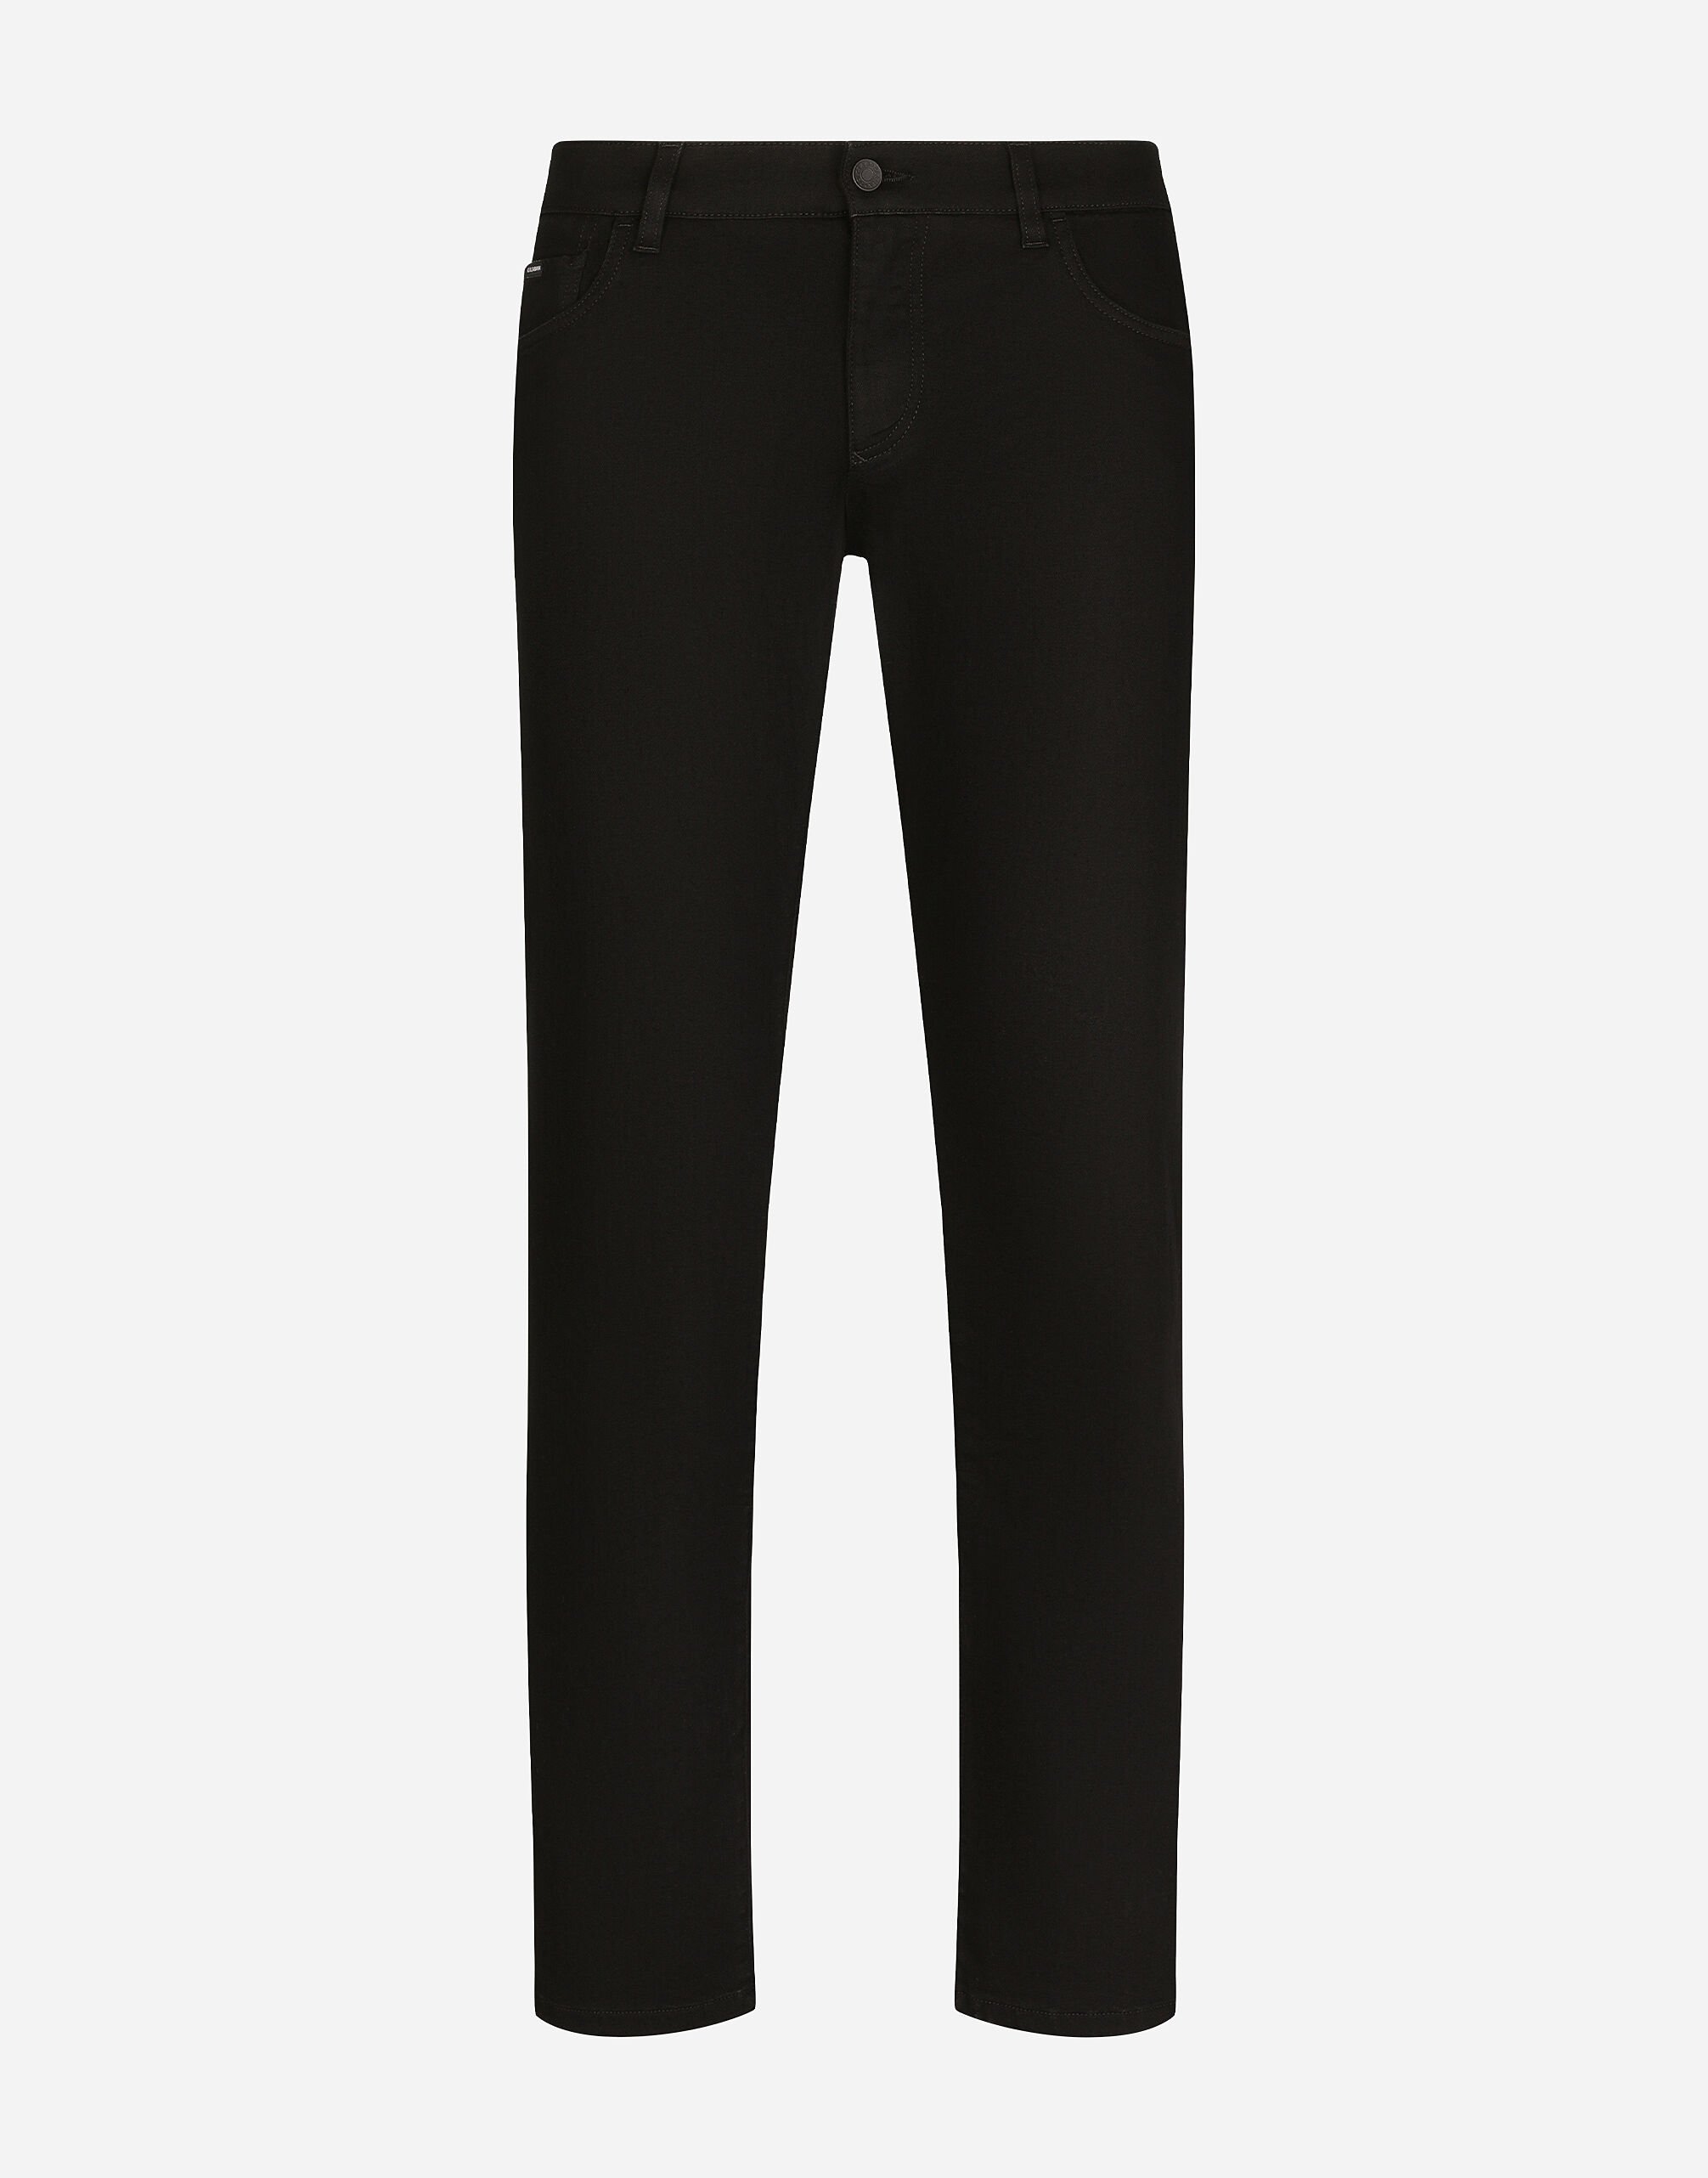 Dolce & Gabbana Black skinny stretch jeans Black GVR7HZG7I3I